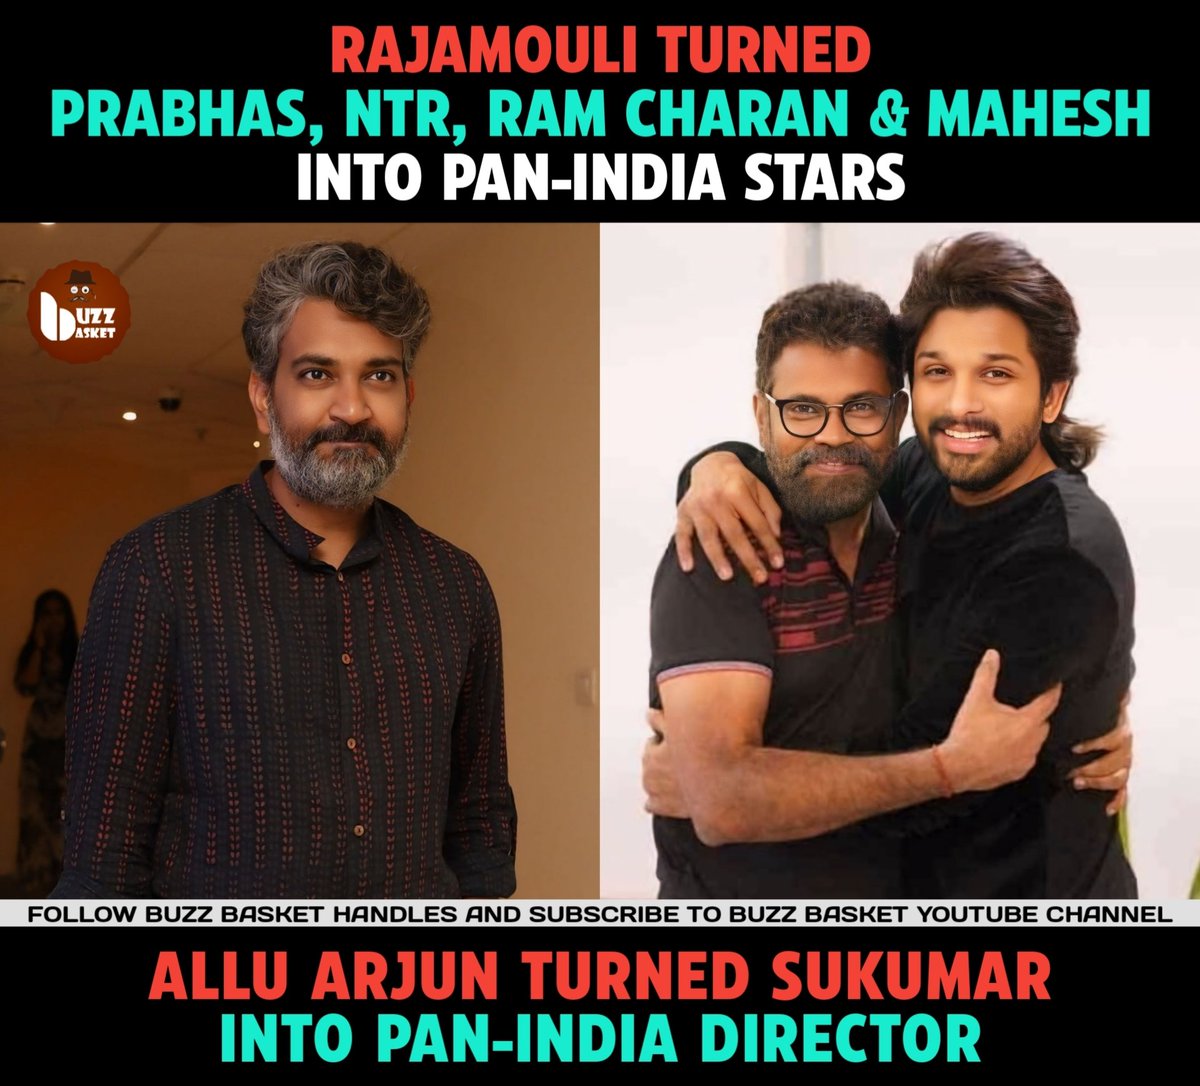 #Rajamouli turned Telugu Heroes into Pan-India Stars, #AlluArjun turned #Sukumar into Pan-India Director.

#SSMB29 #PushpaTheRule #Prabhas #RamCharan #NTR